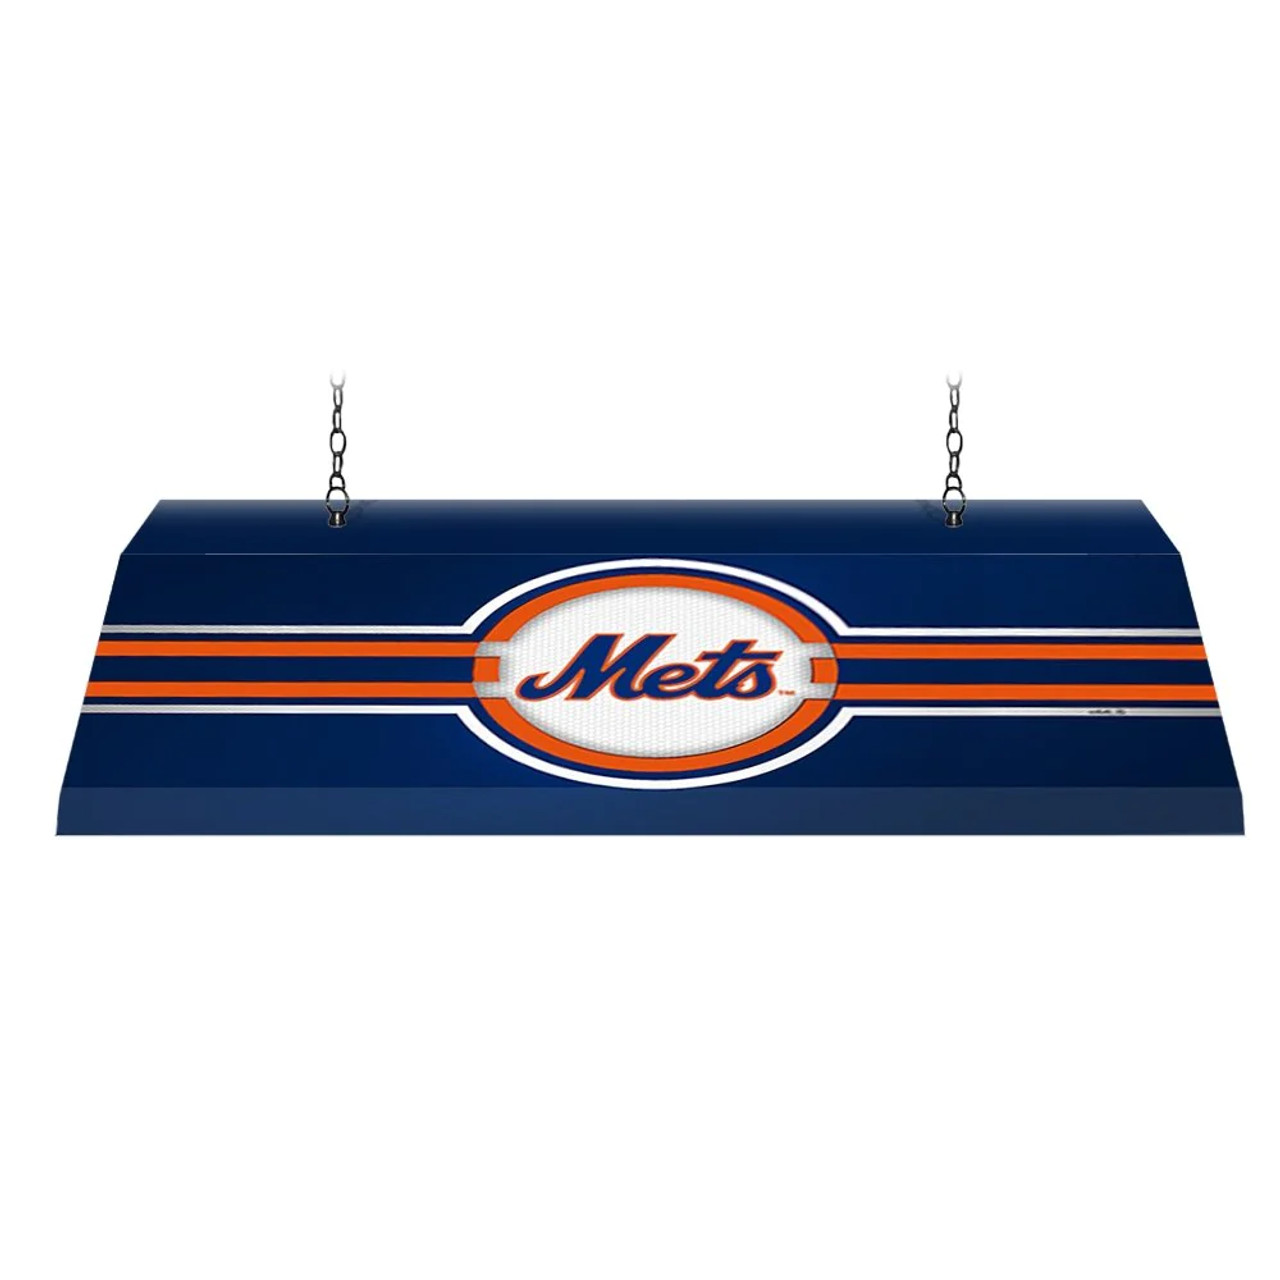 New York Mets: Edge Glow Pool Table Light "A" Version